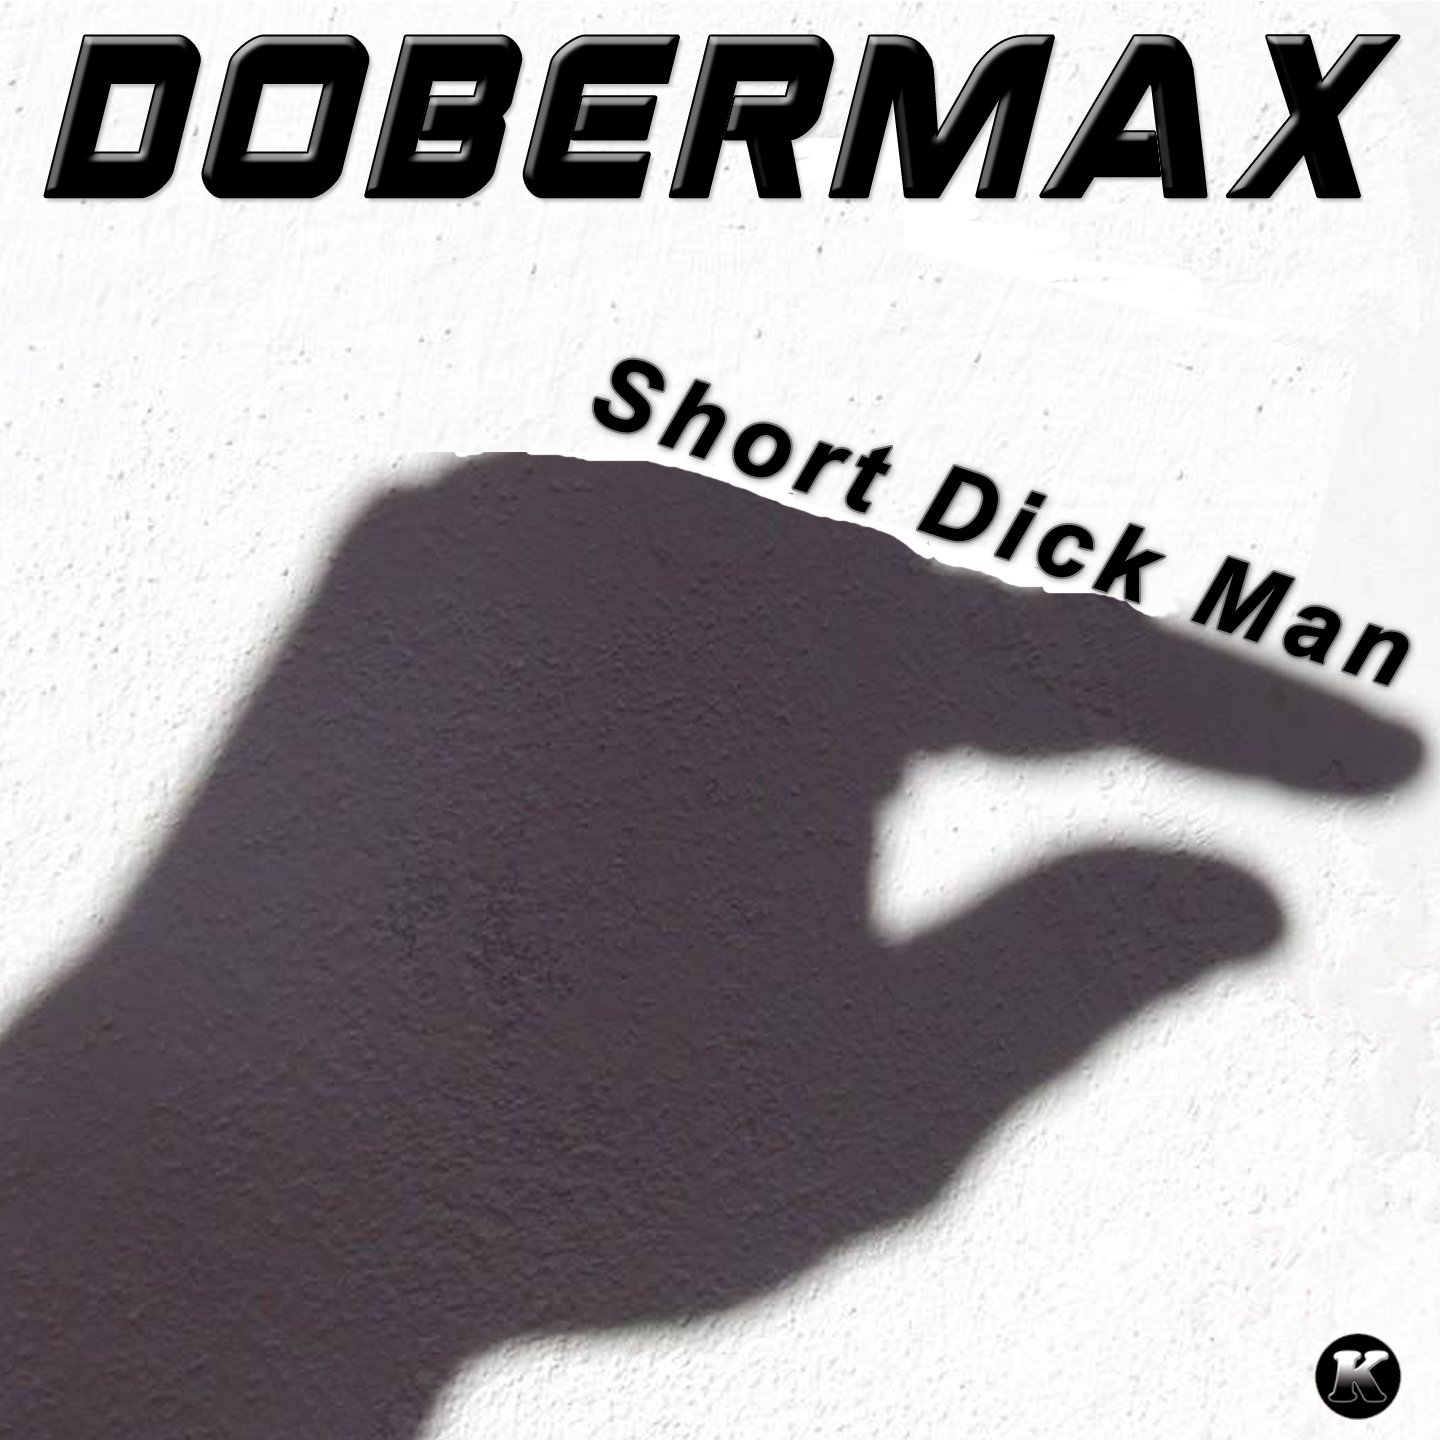 Short dick man radio. Short dick man слушать. Short dick man текст. Short dick man Автор песни.